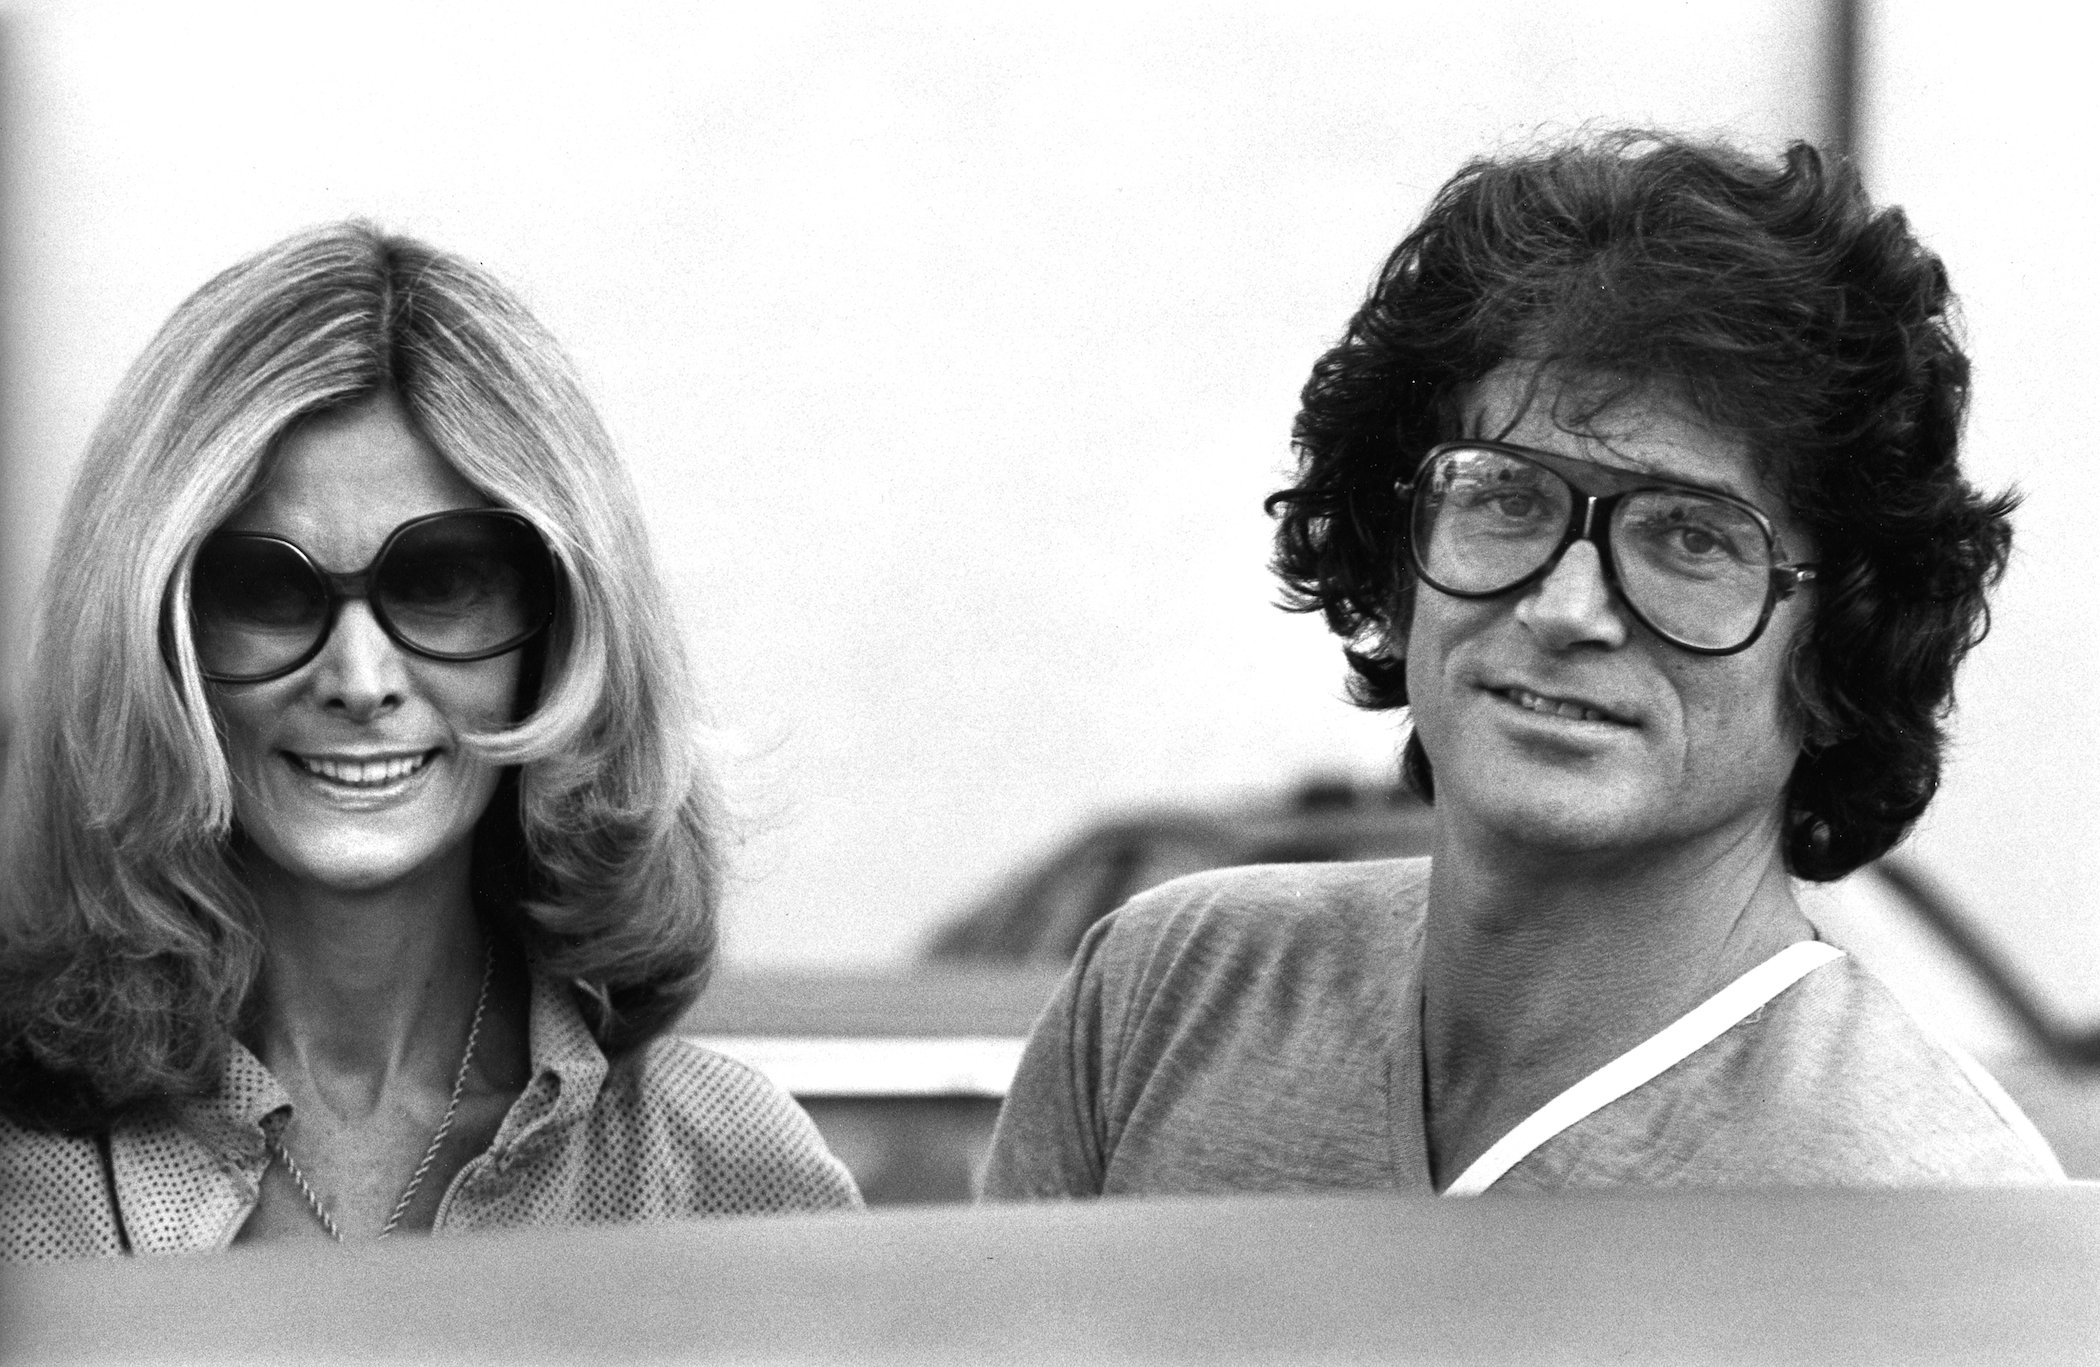 Michael Landon and wife Lynn Noe sighted on Feb. 9, 1979